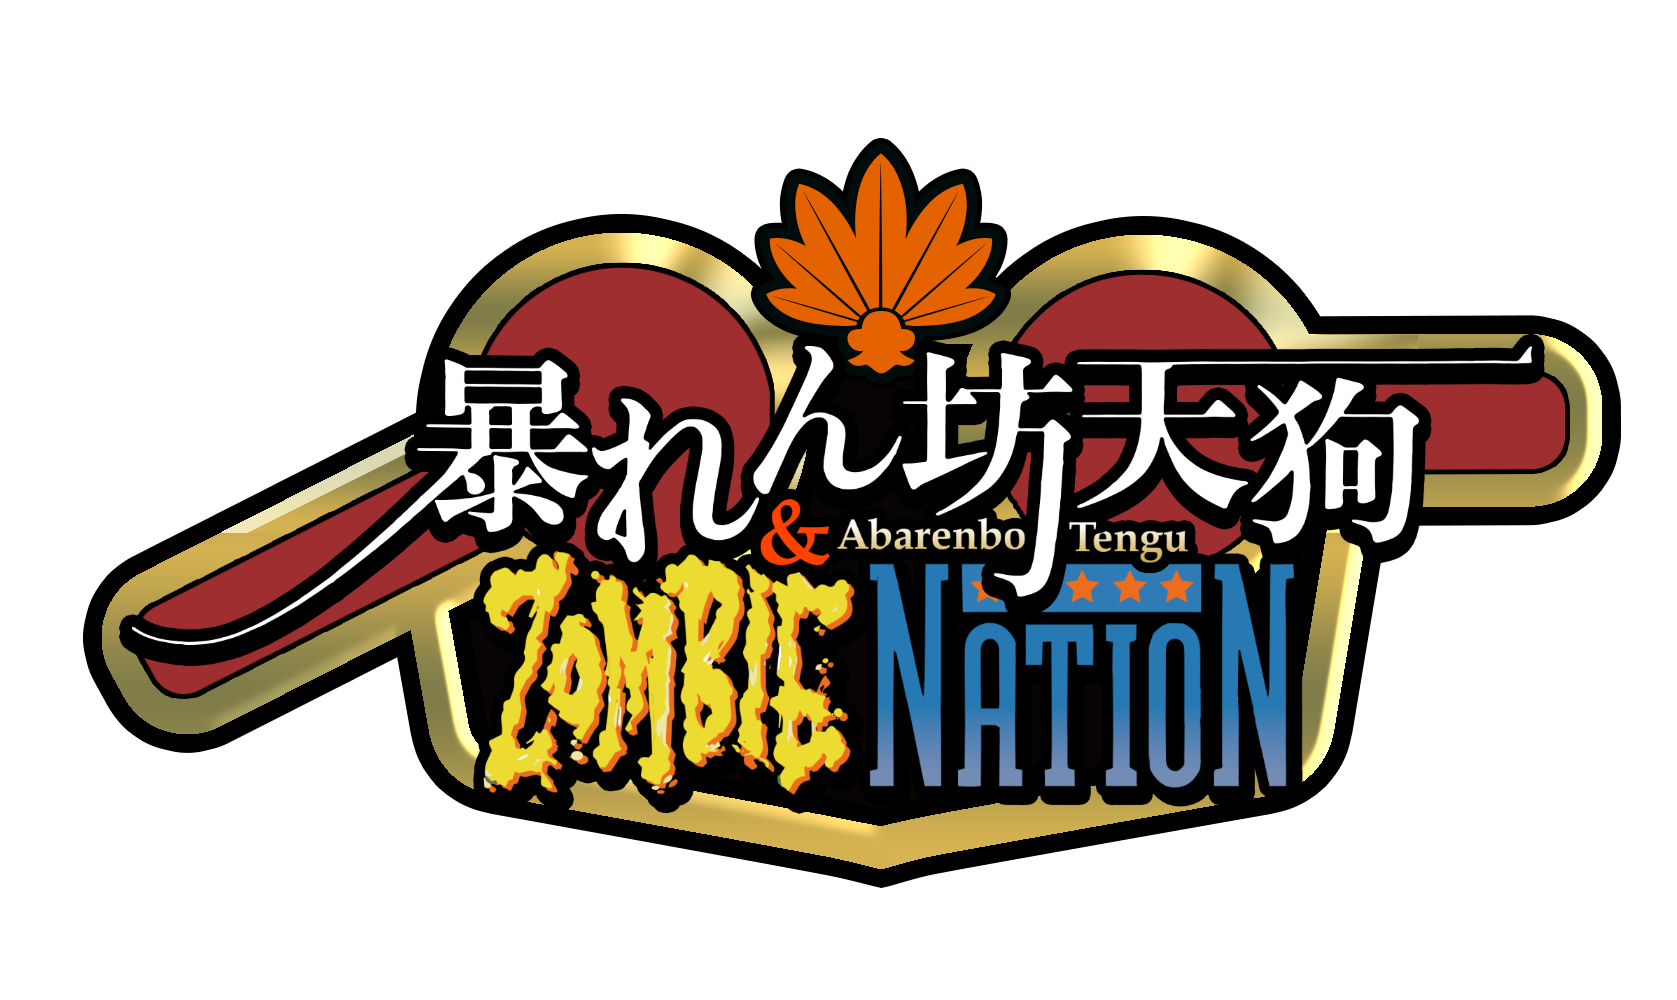 Abarenbo Tengu & Zombie Nation